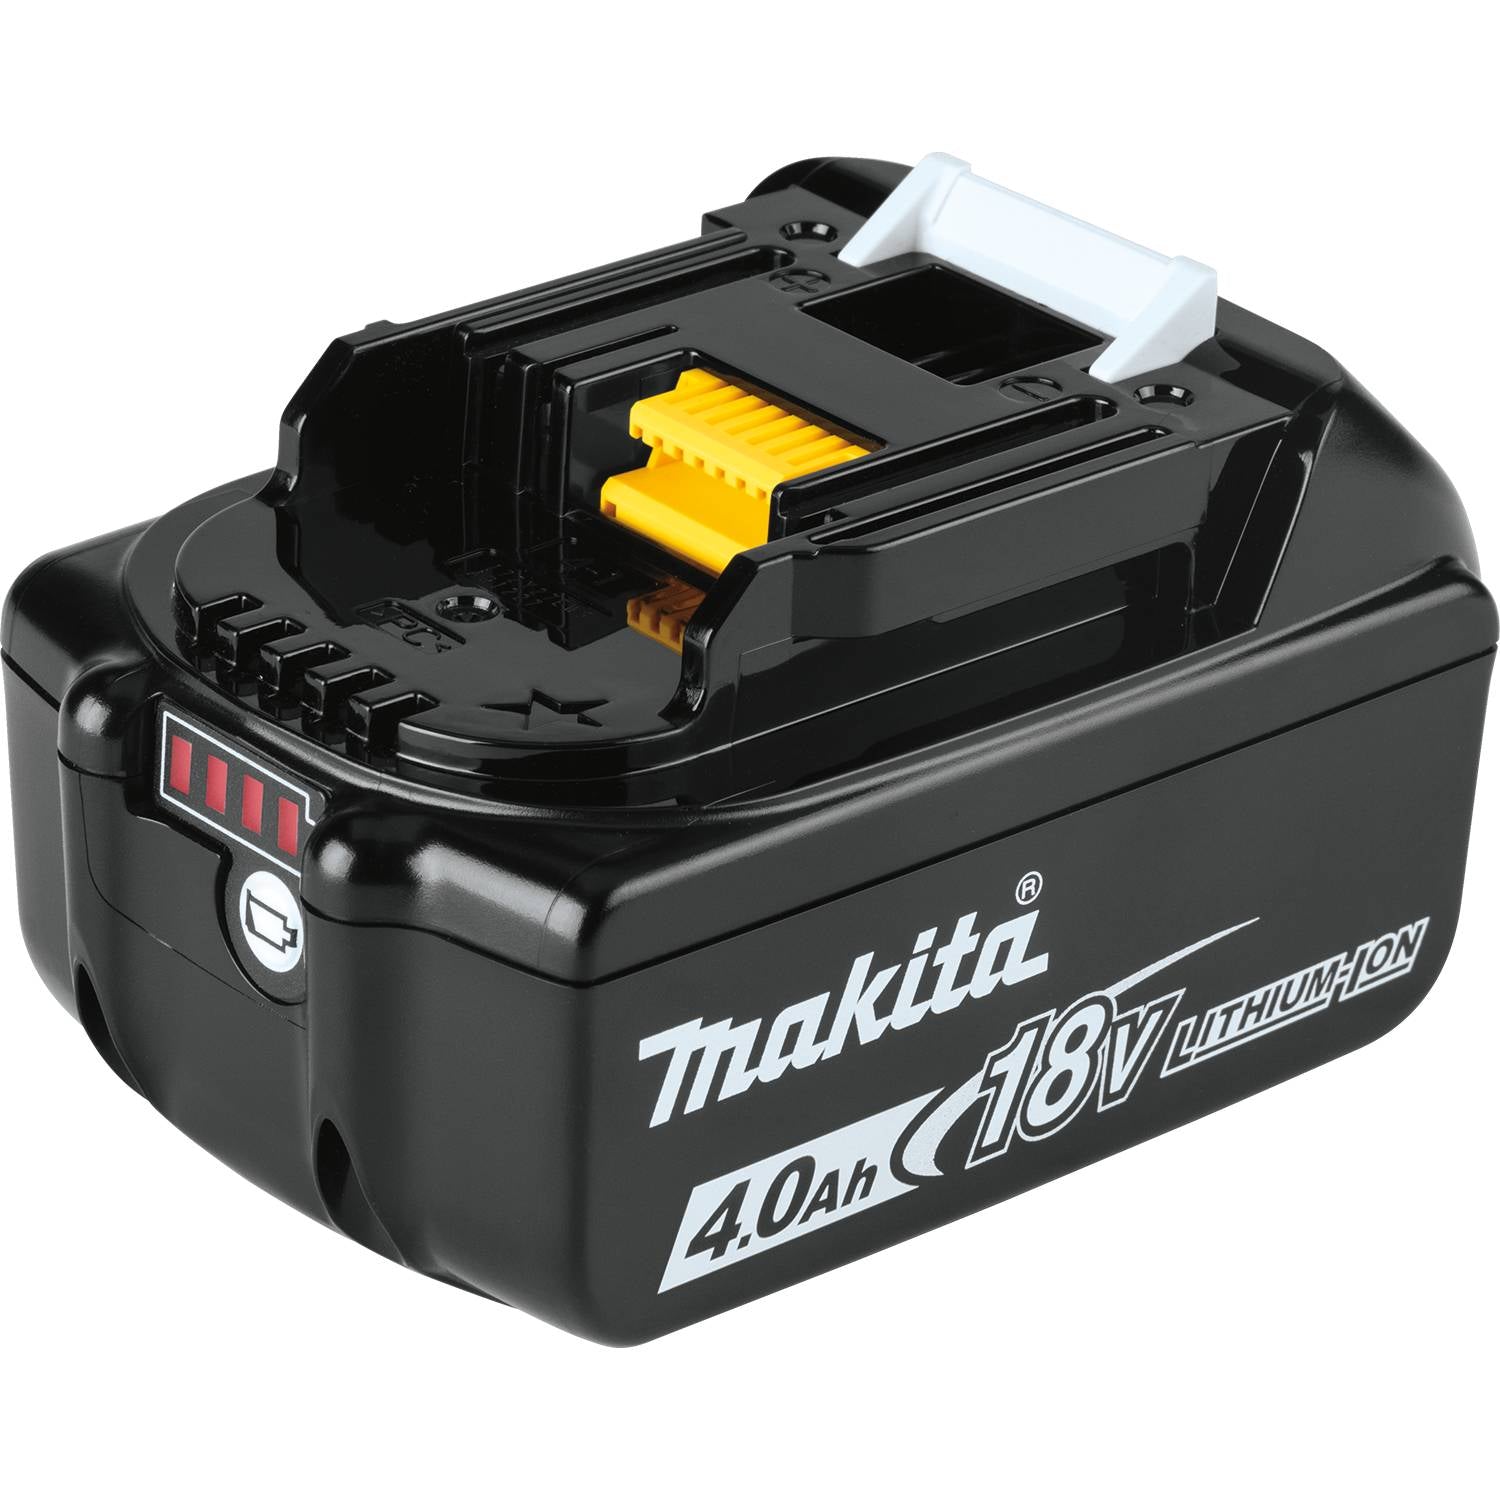 Makita XT510SM 18V LXT Lithium-Ion Cordless 5-Tool Combo Kit 4.0 Ah